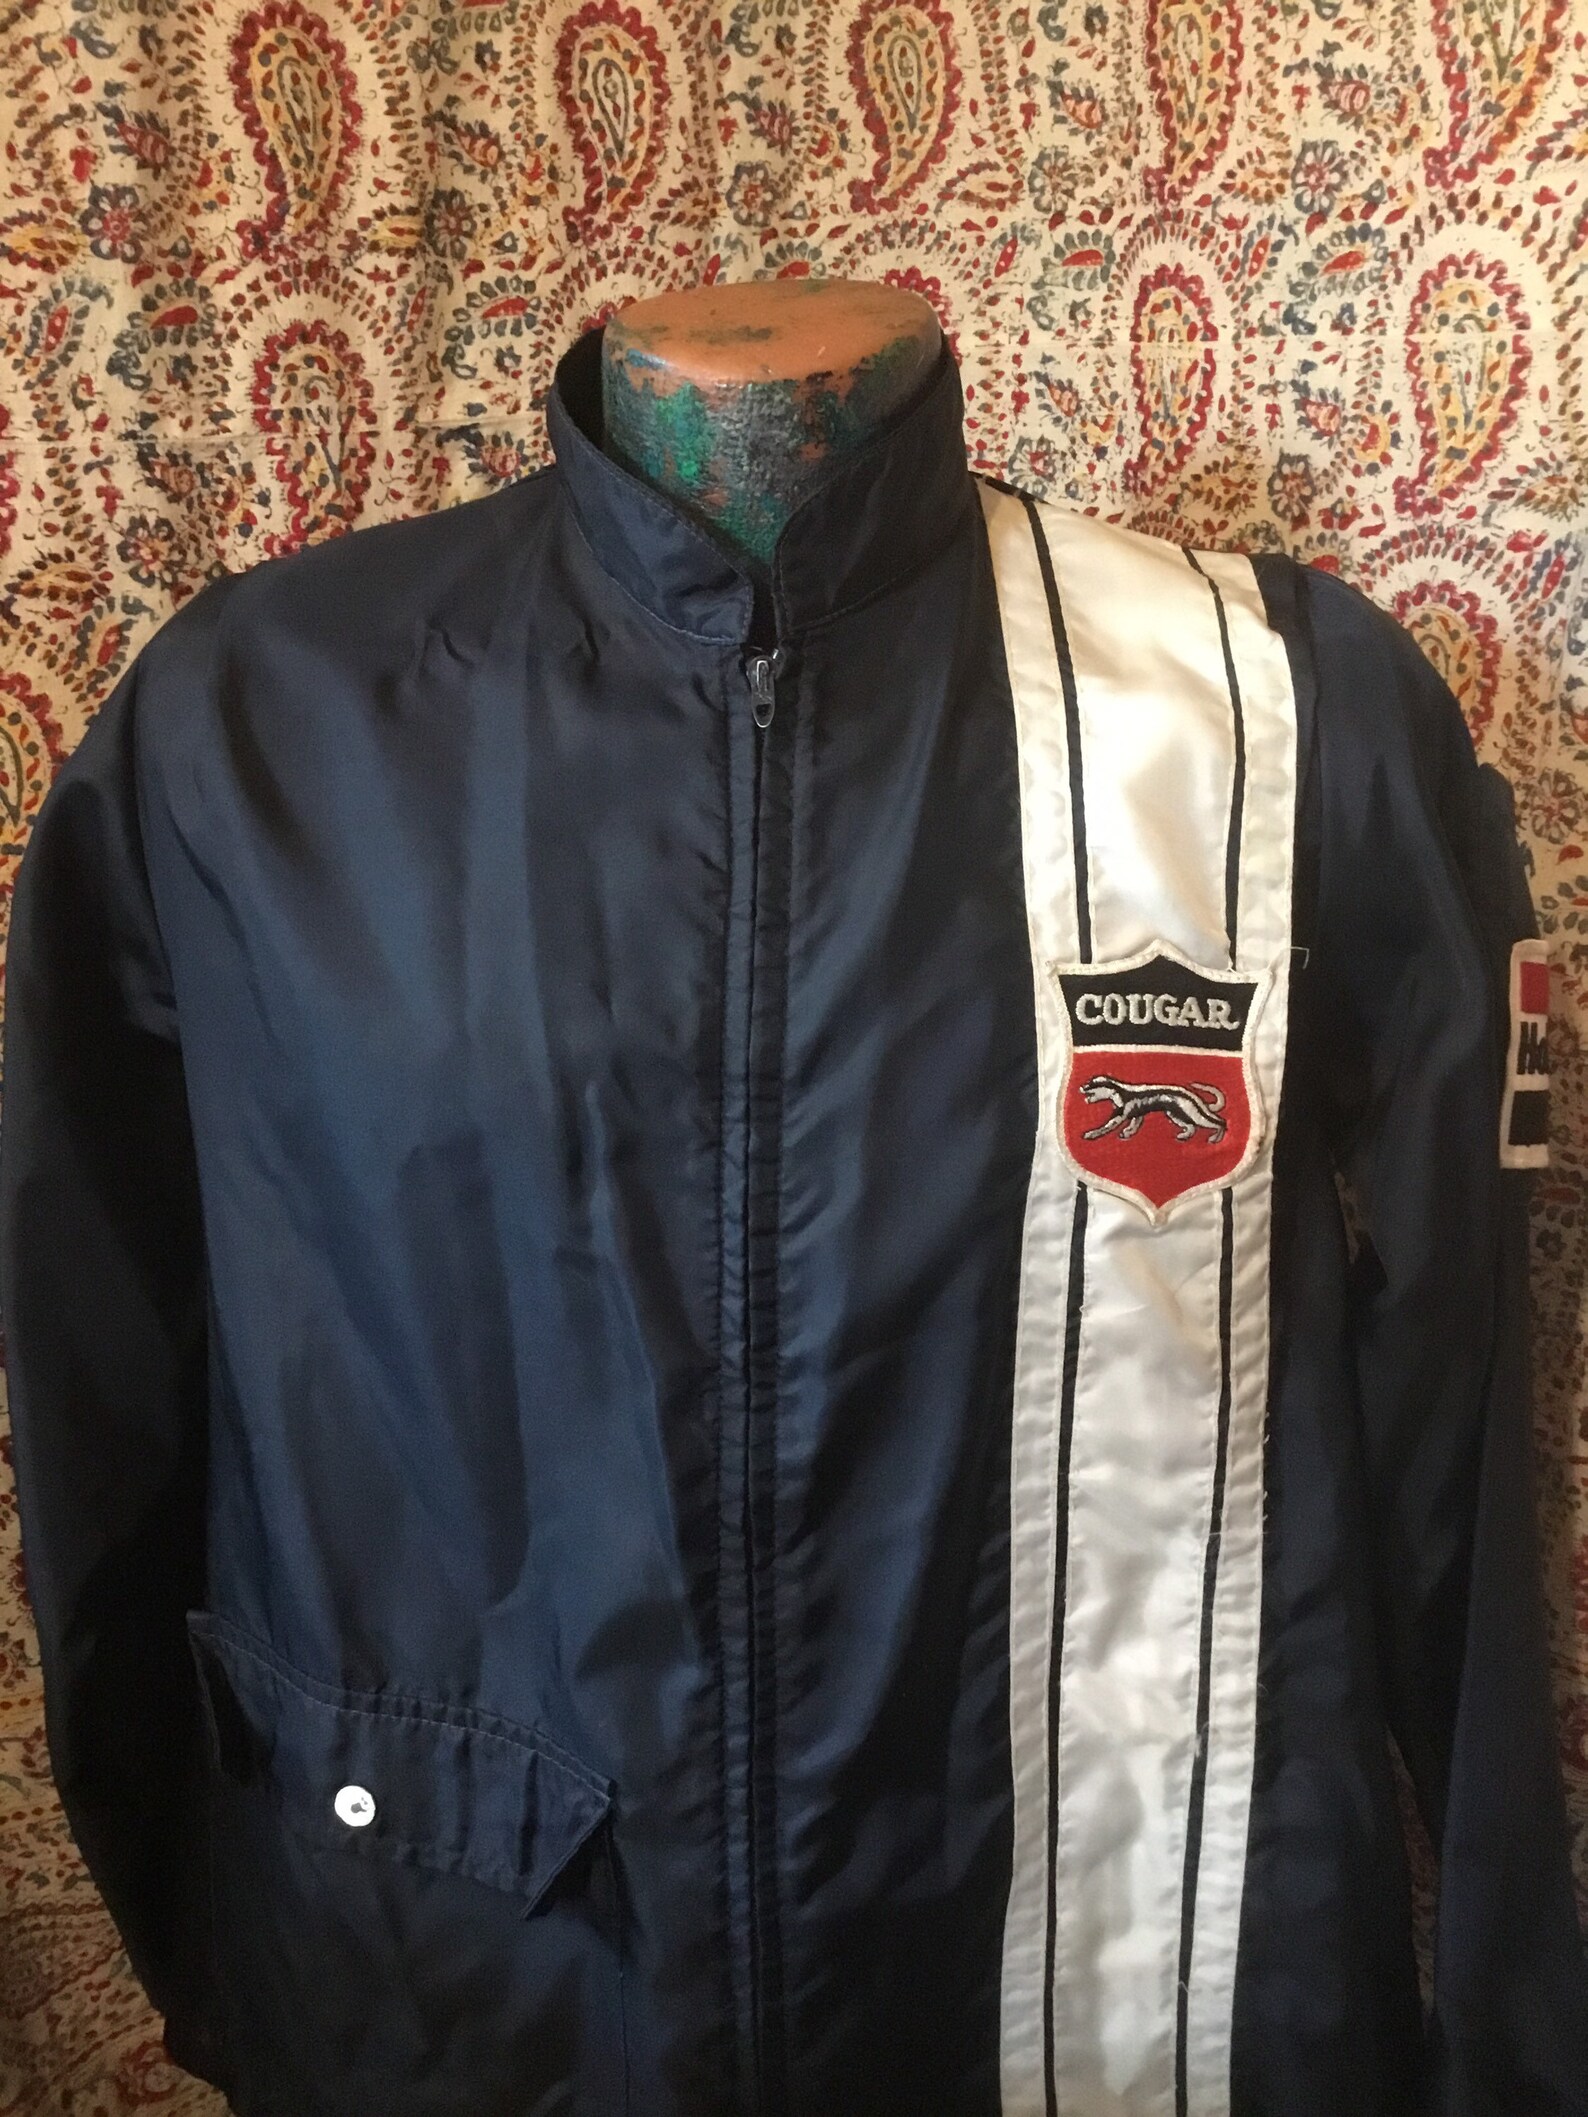 Cool 1960s Cougar Racing Jacket Vintage Size Medium Black | Etsy